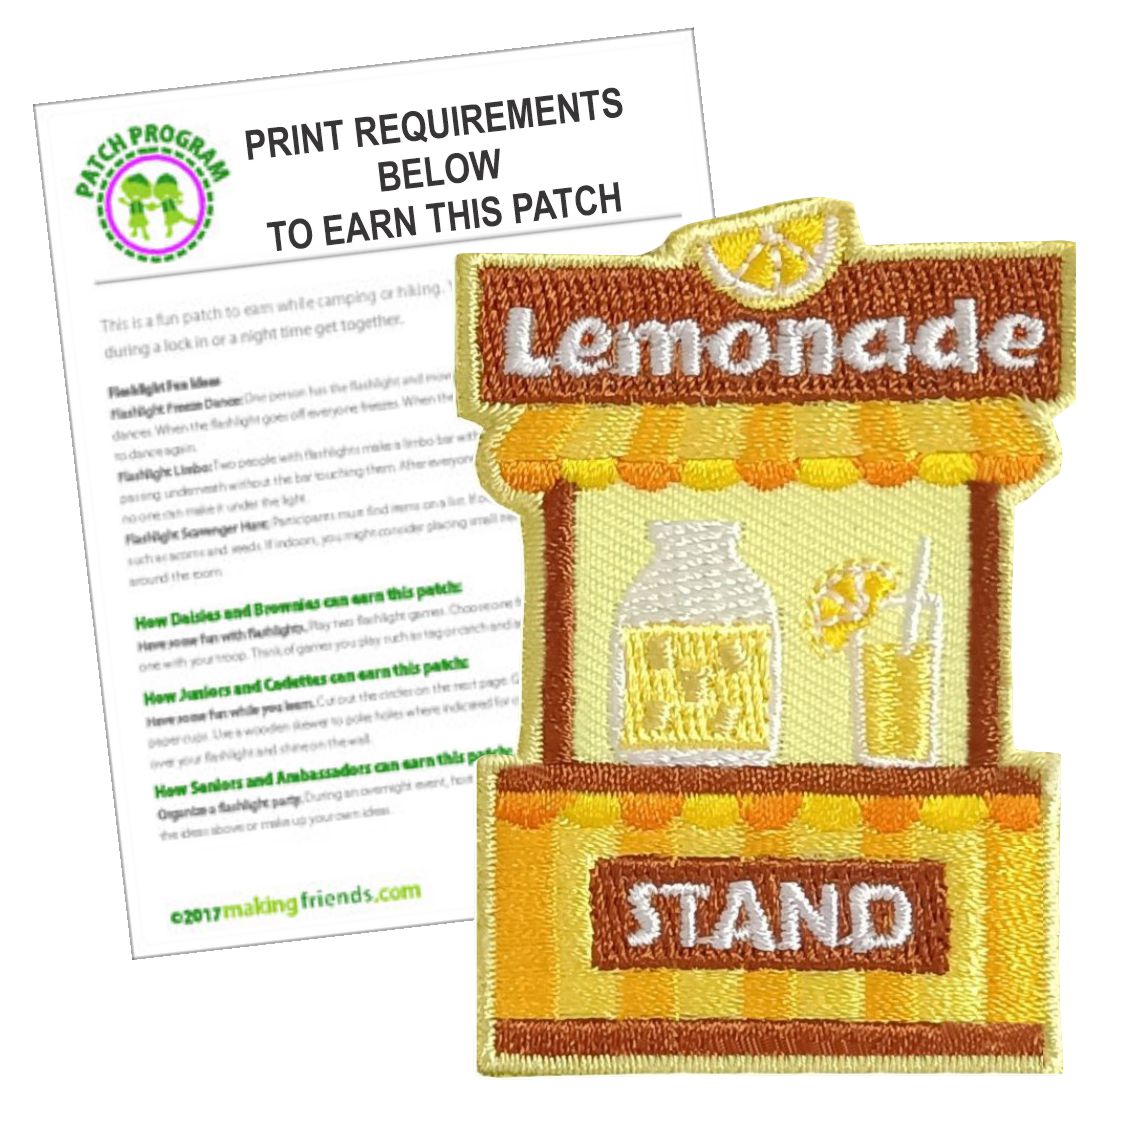 Girl Scout lemonade stand patch program